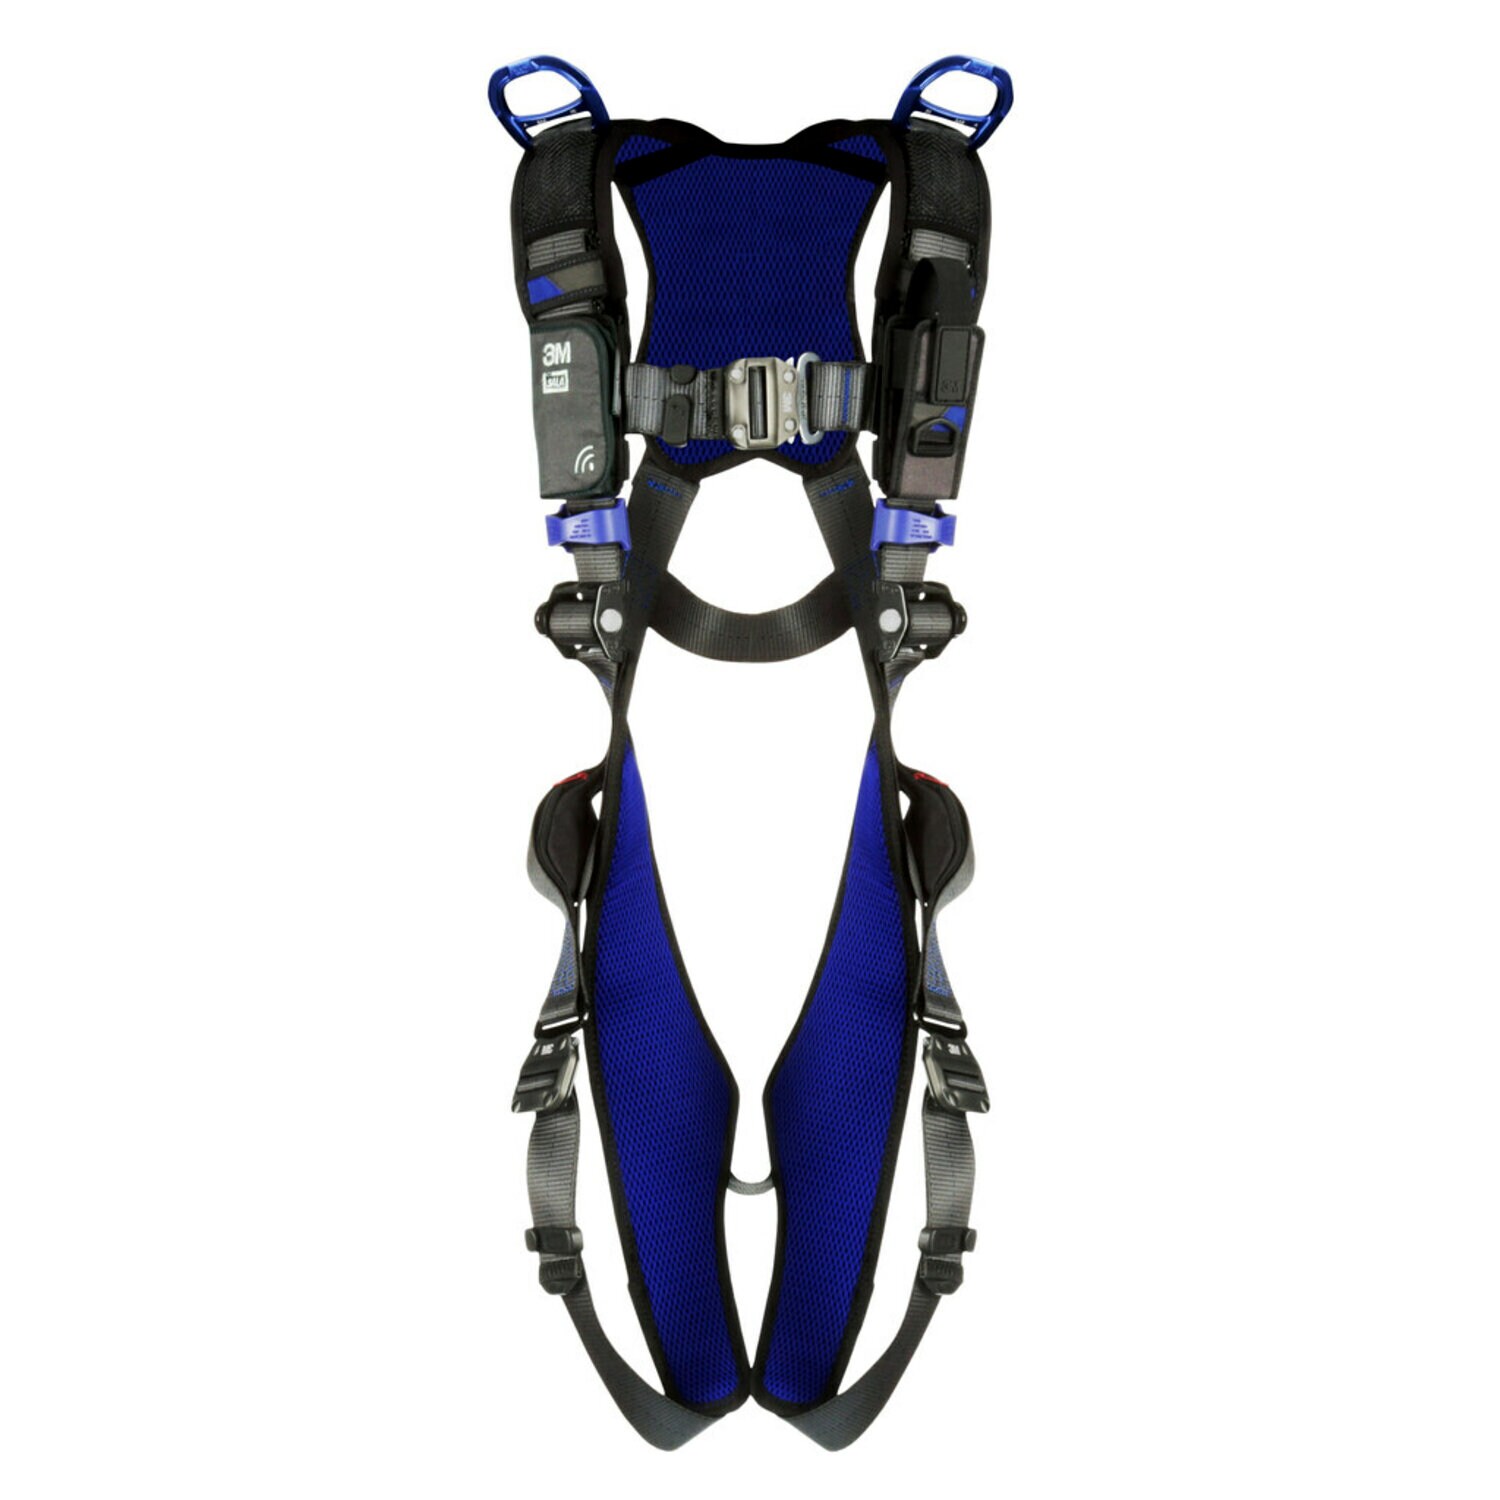 7100188756 - 3M DBI-SALA ExoFit X300 Comfort Vest Rescue Safety Harness 1113061,
Small